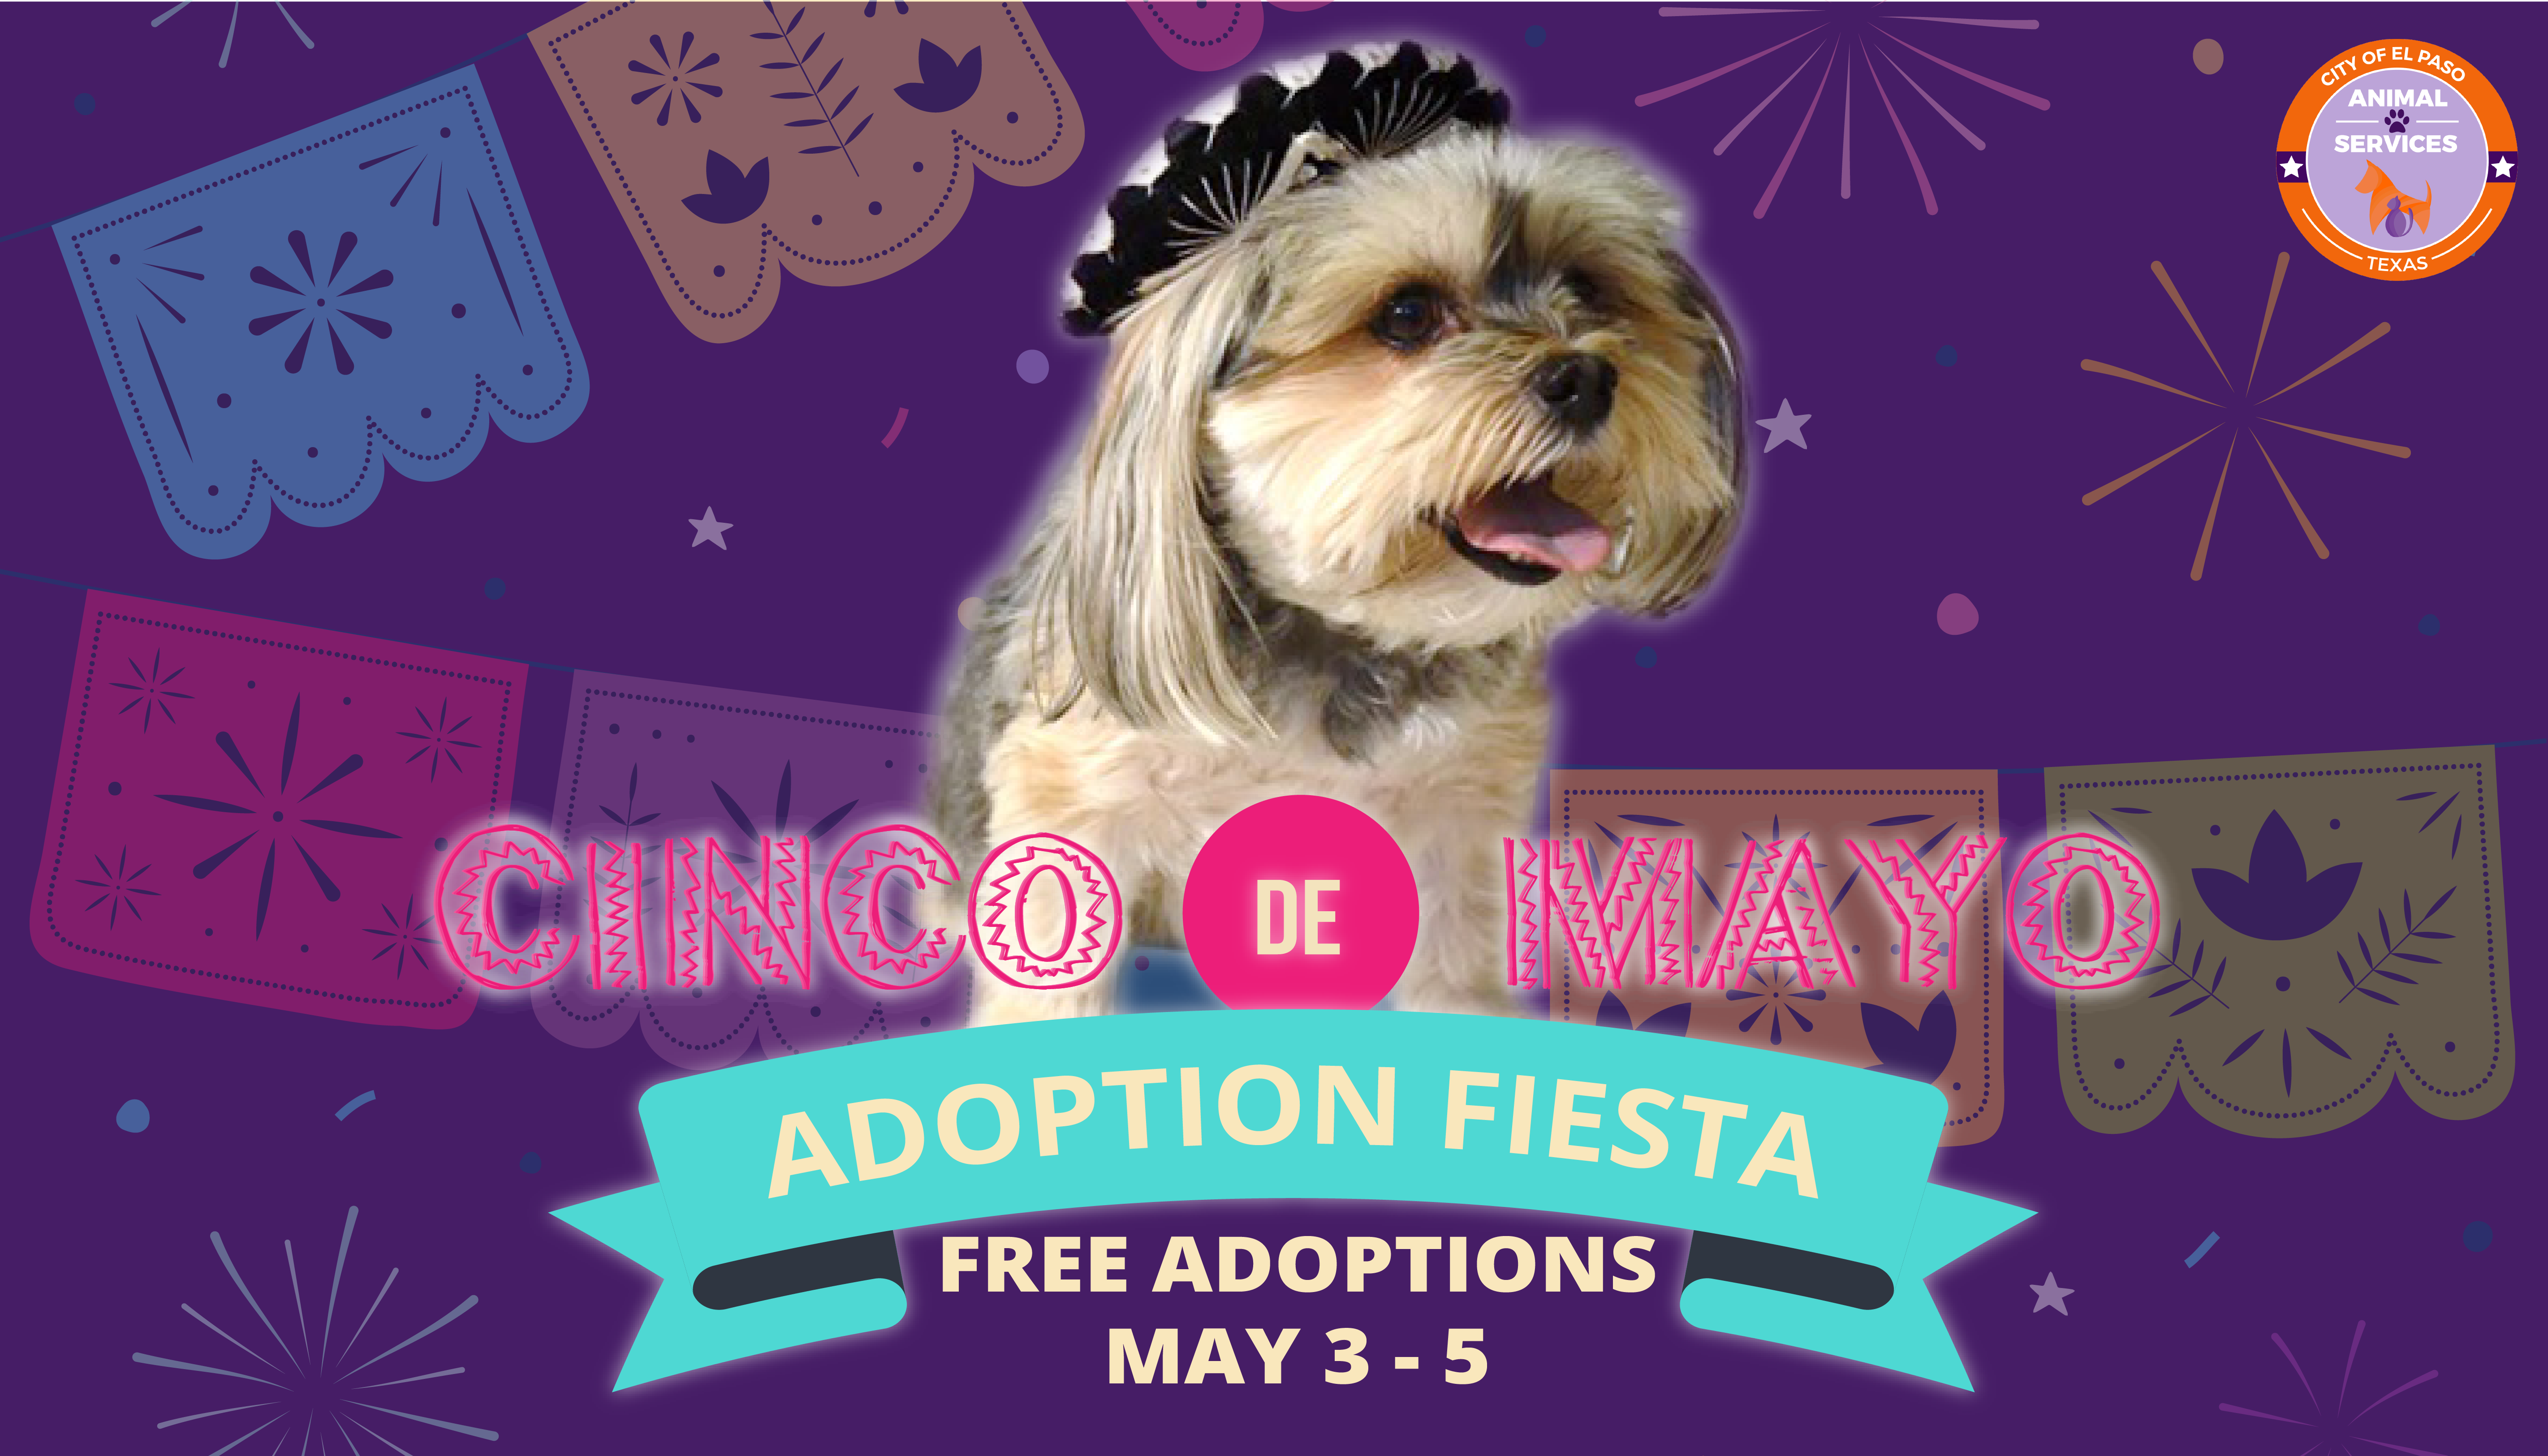 free pet adoptions this weekend